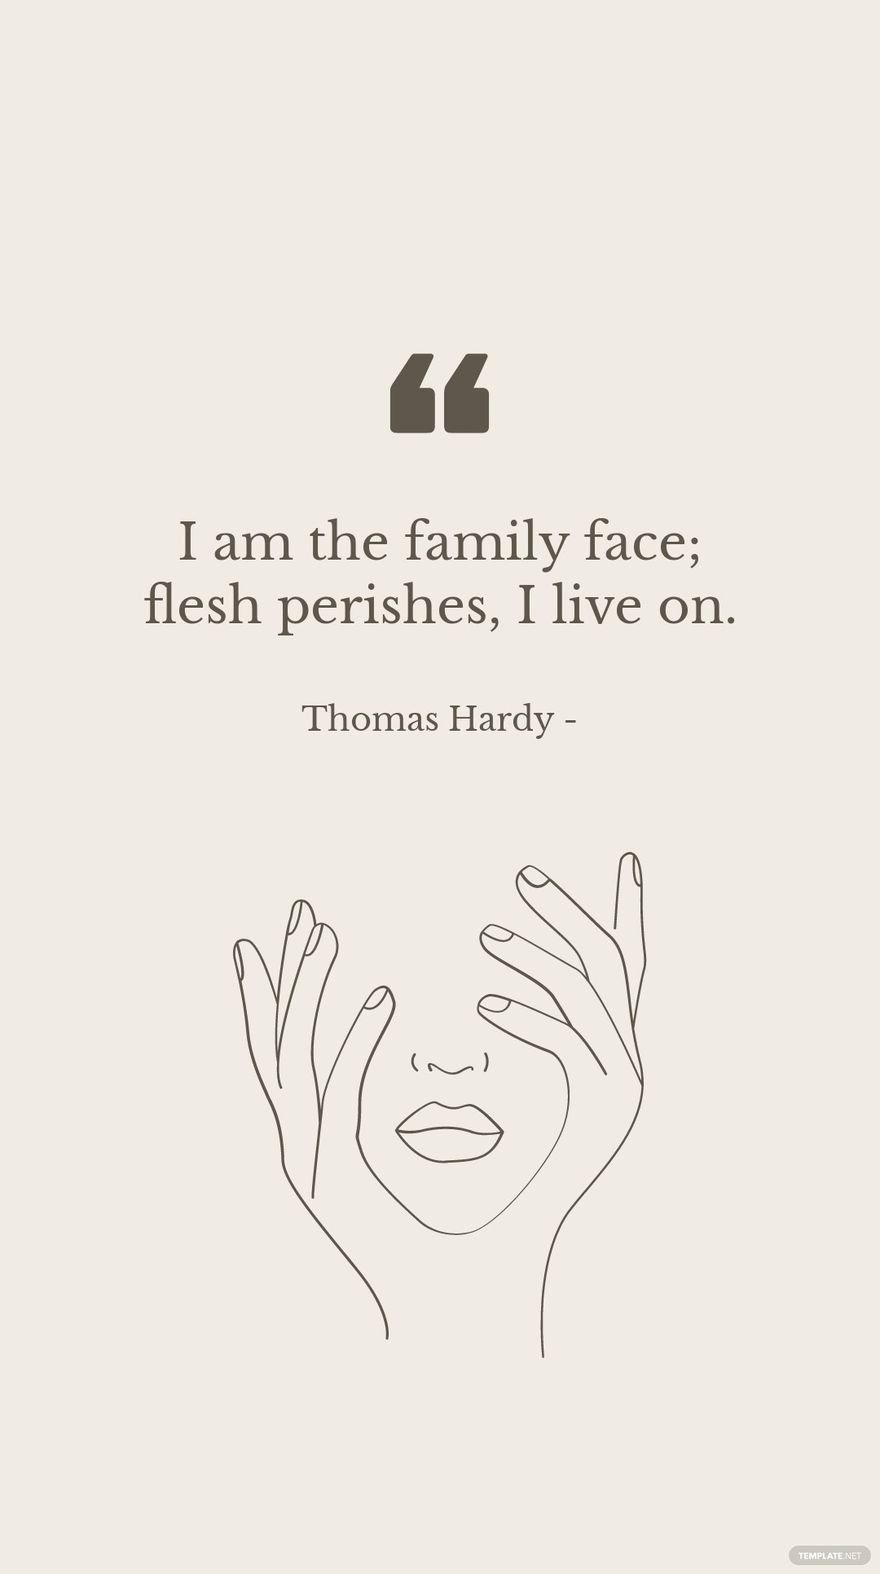 Thomas Hardy - I am the family face; flesh perishes, I live on. in JPG